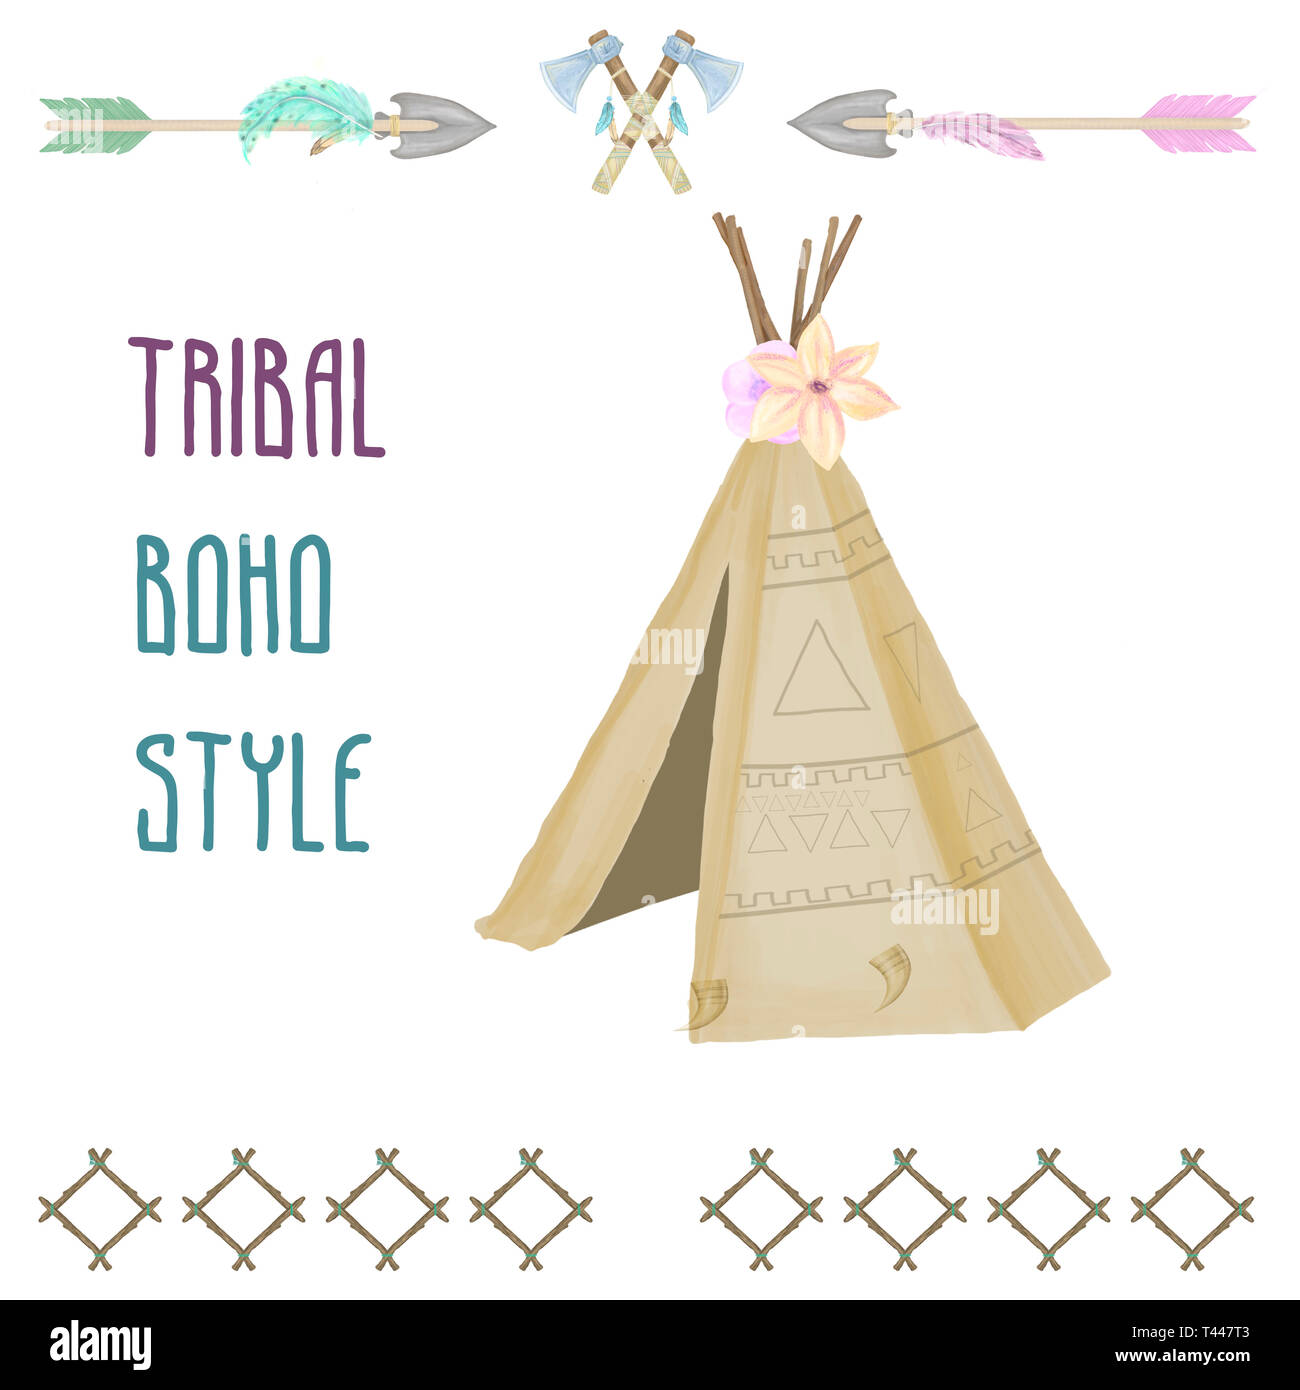 Teepee digital art aztec indian digital art boho tribal illustration geometric on white background Stock Photo